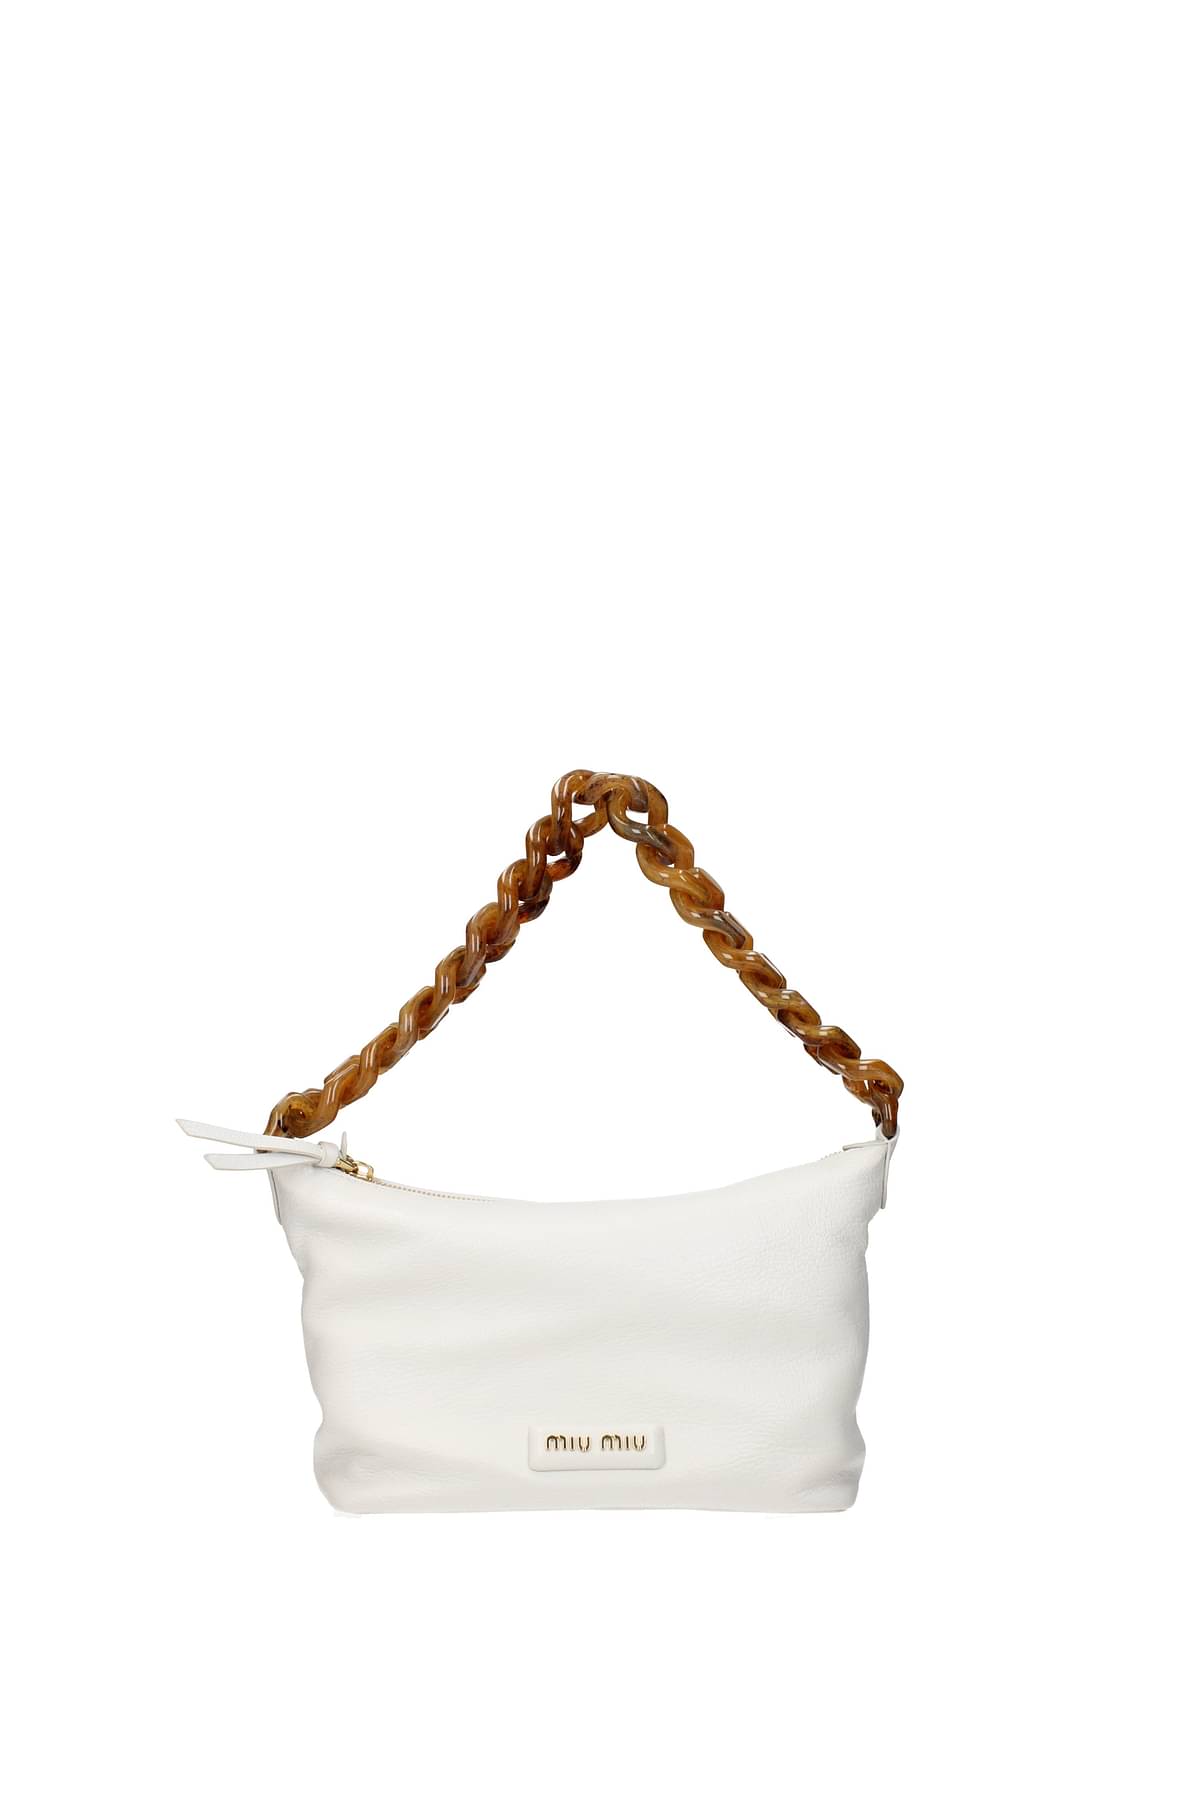 Miu Miu Shoulder bags Women 5BC1042AJBF0ZZC Leather White 829,5€